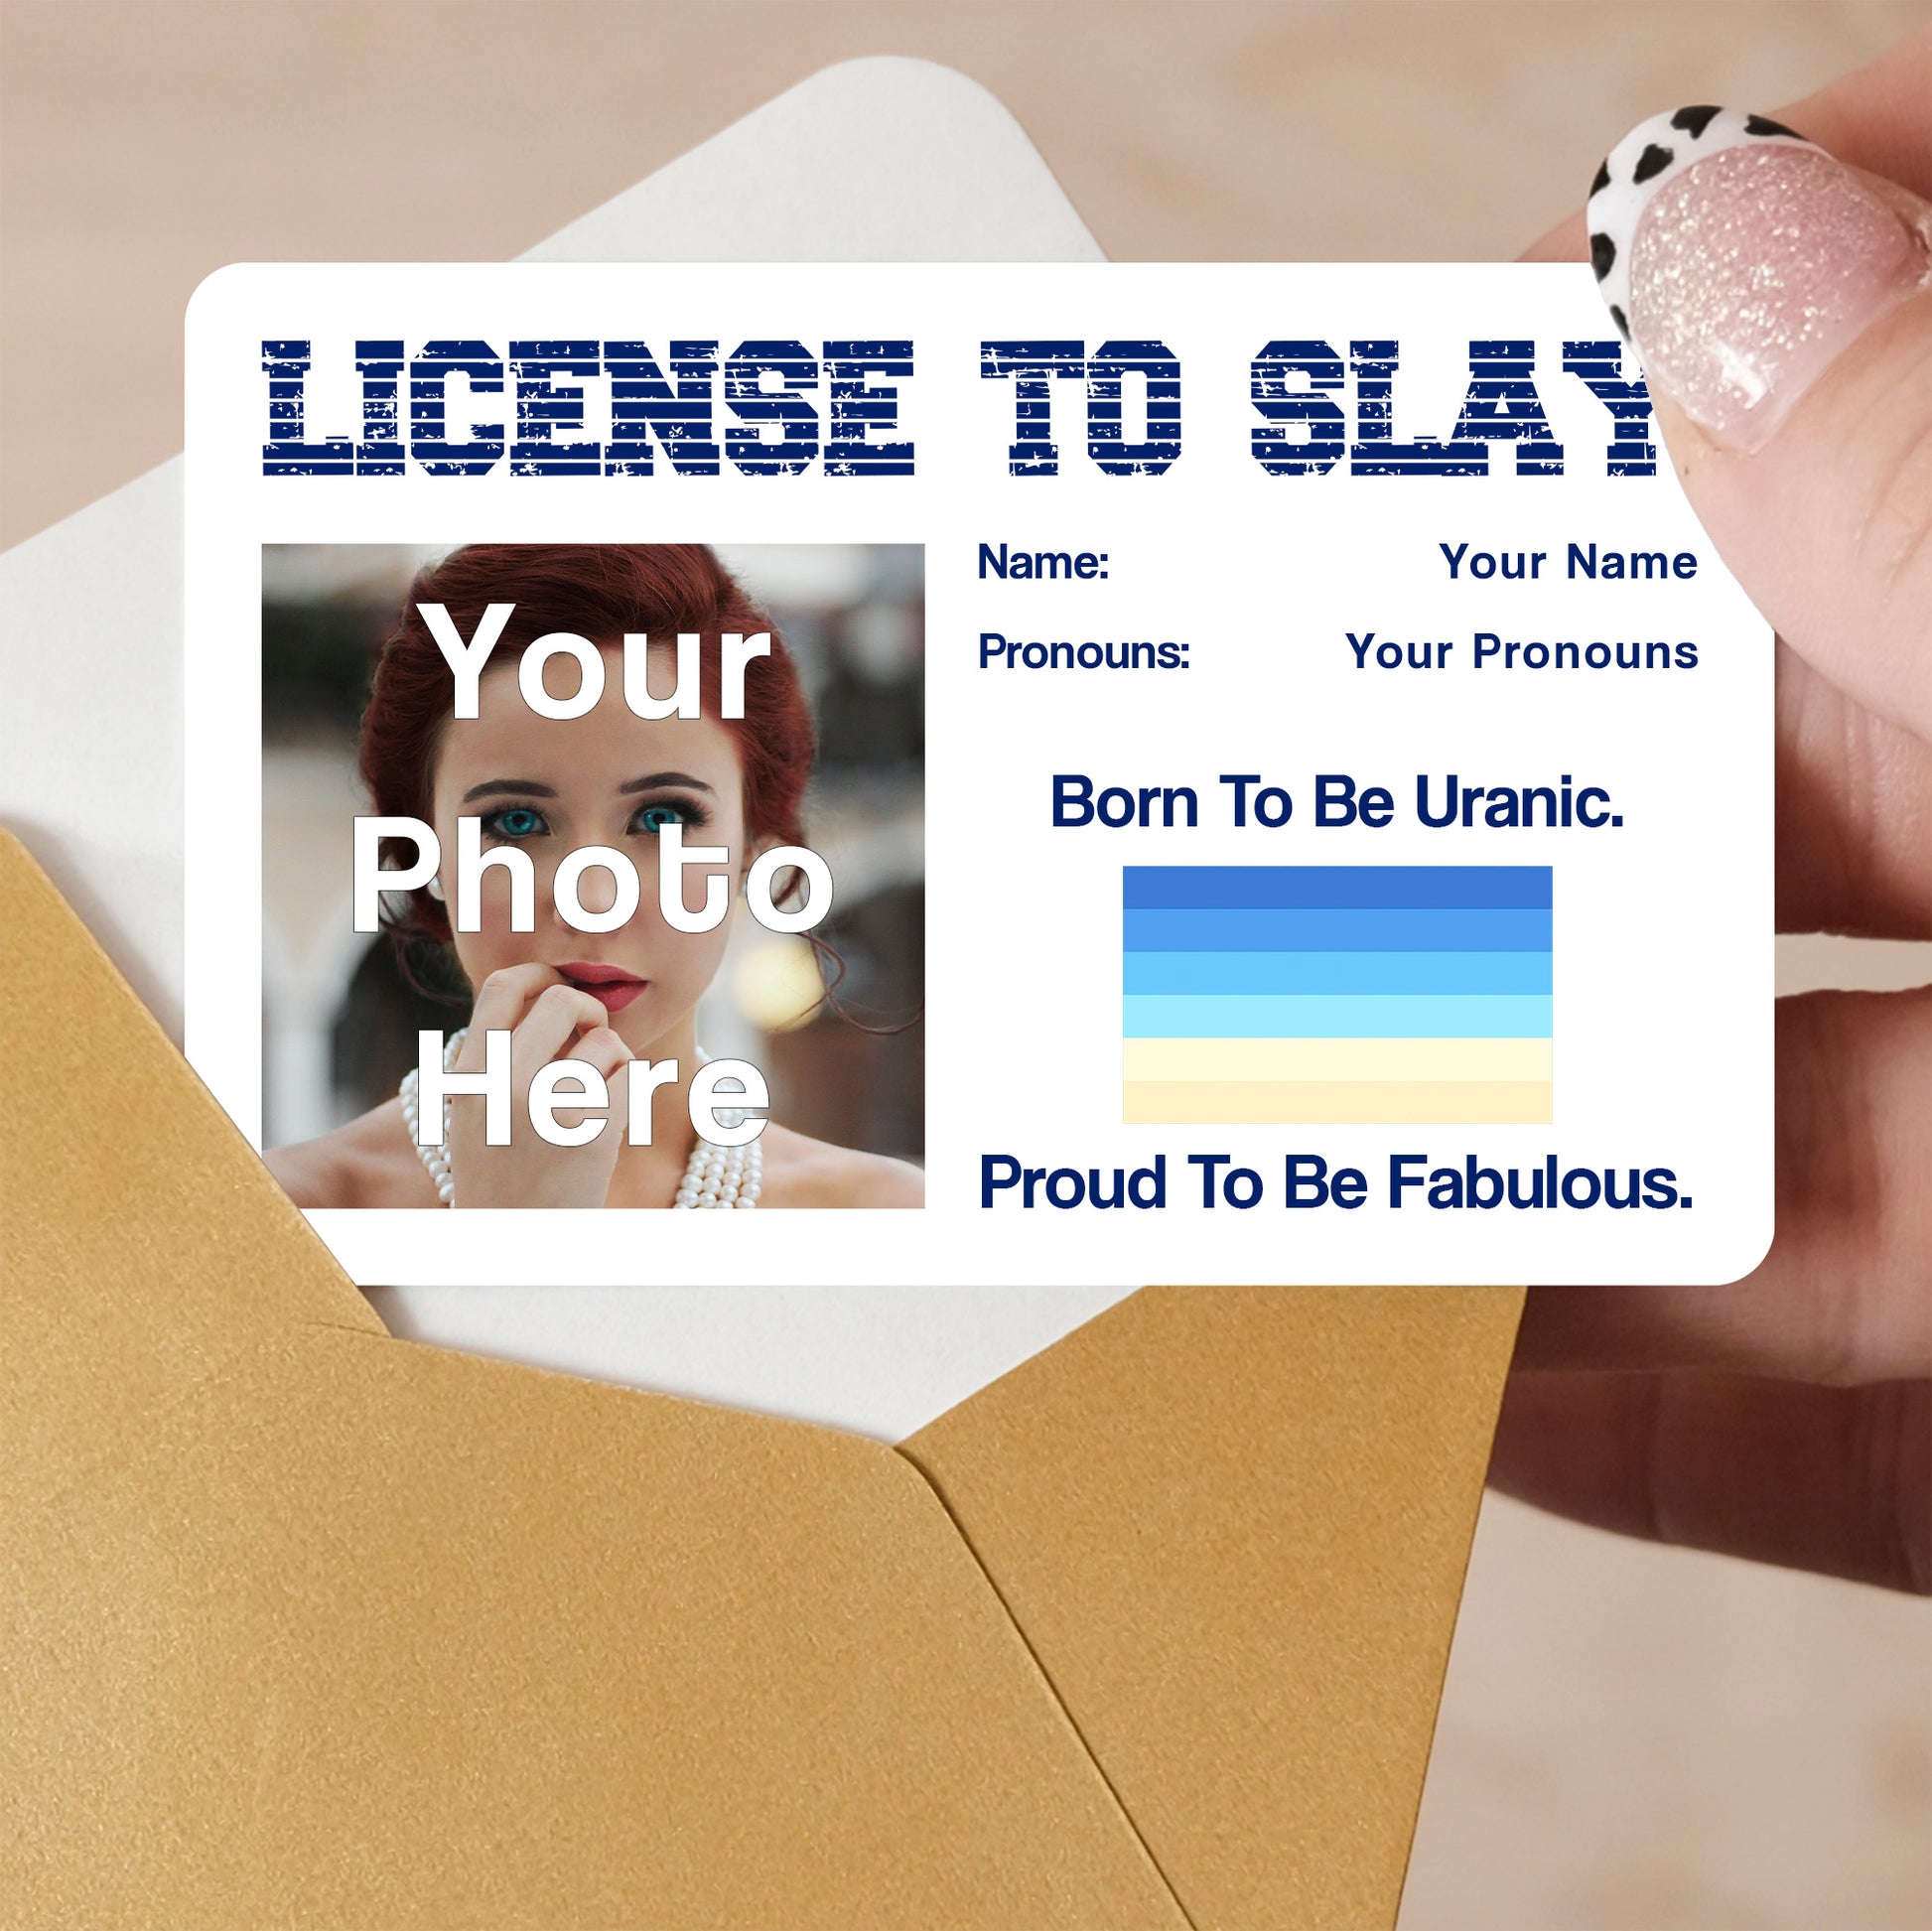 Uranic pride personalised license to slay card